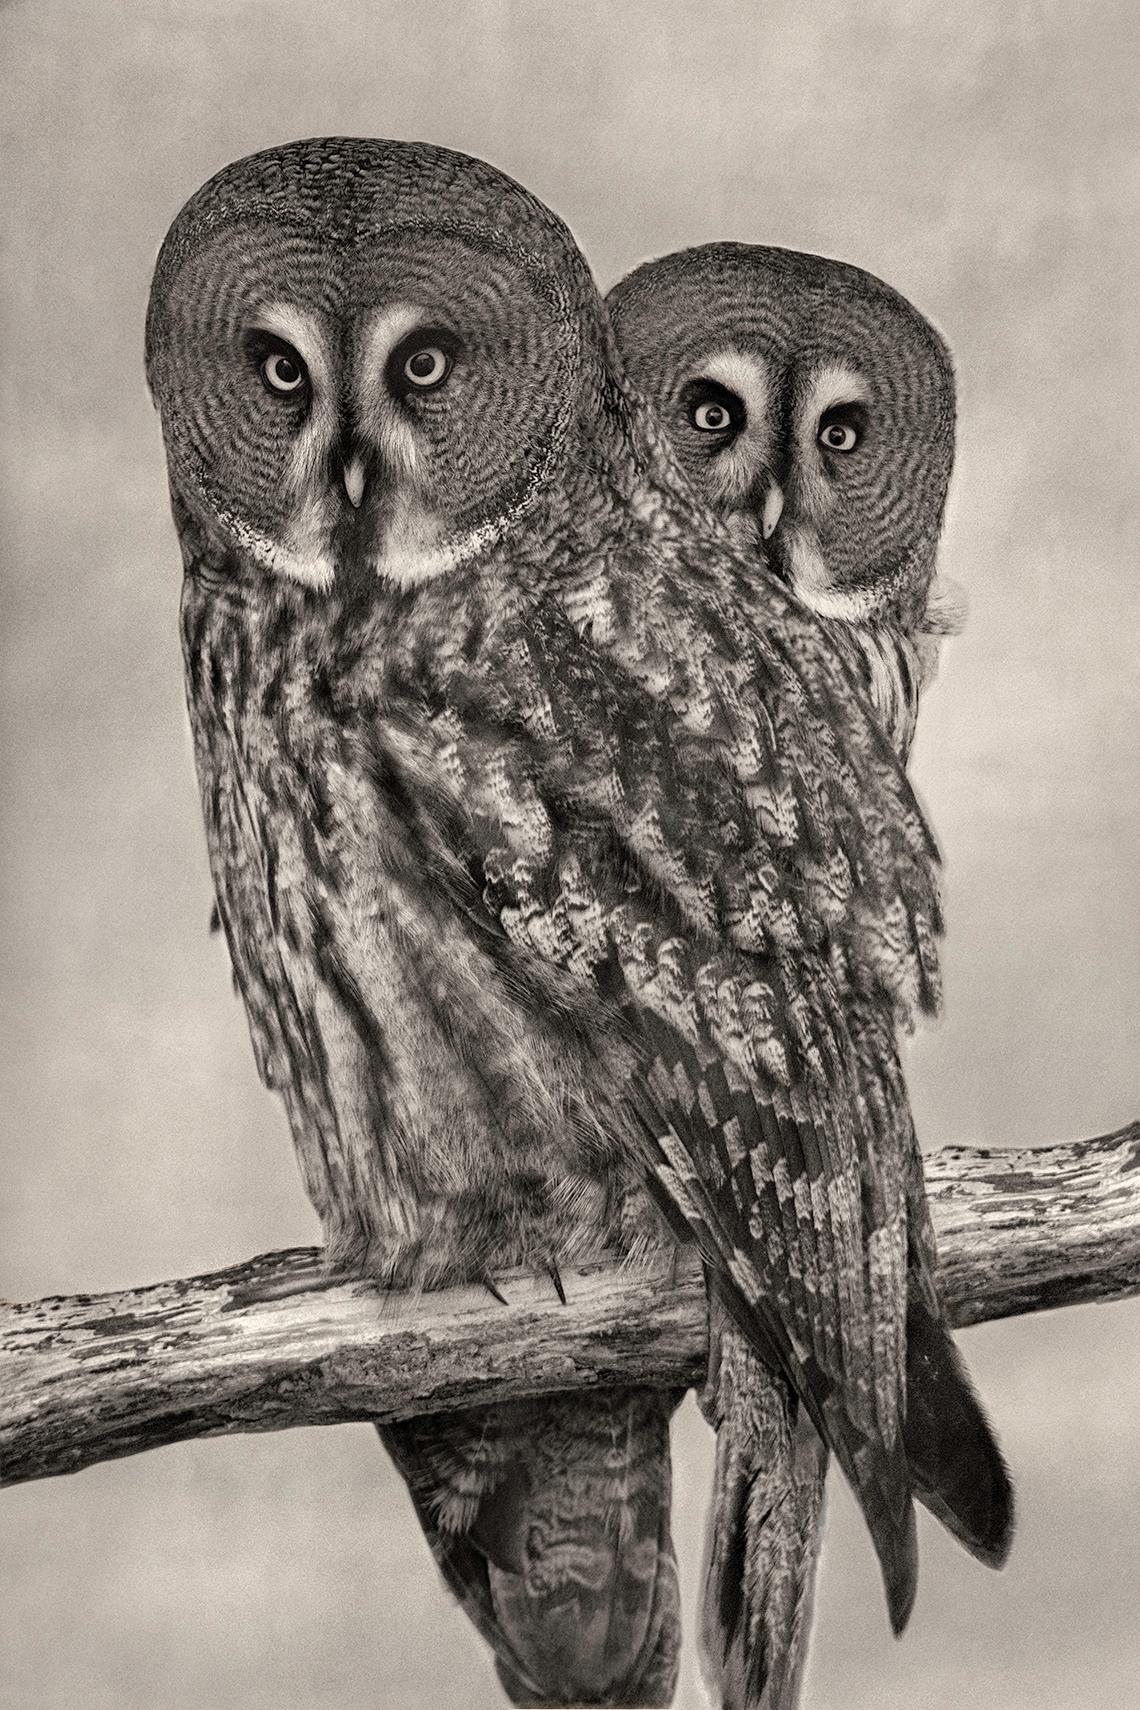 Animal Print Beth Moon - Great Gray Owls, photographie en édition limitée, signée, impression platine/palladium